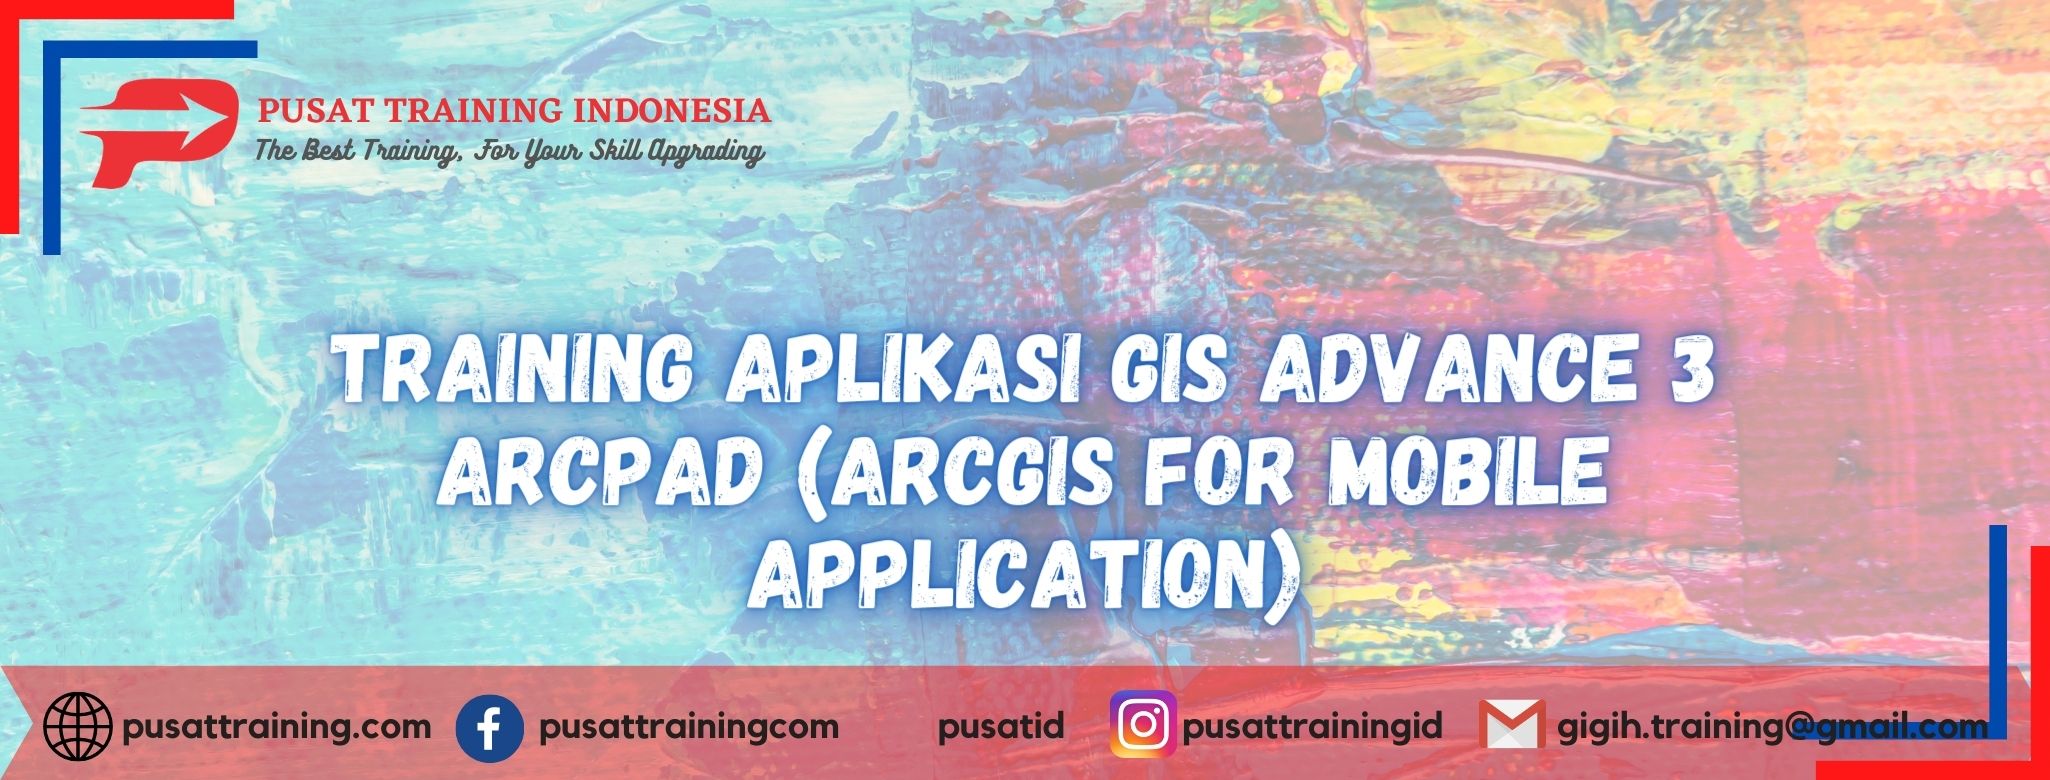 Training-Aplikasi-GIS-Advance-3-ArcPAD-ArcGIS-for-Mobile-Application